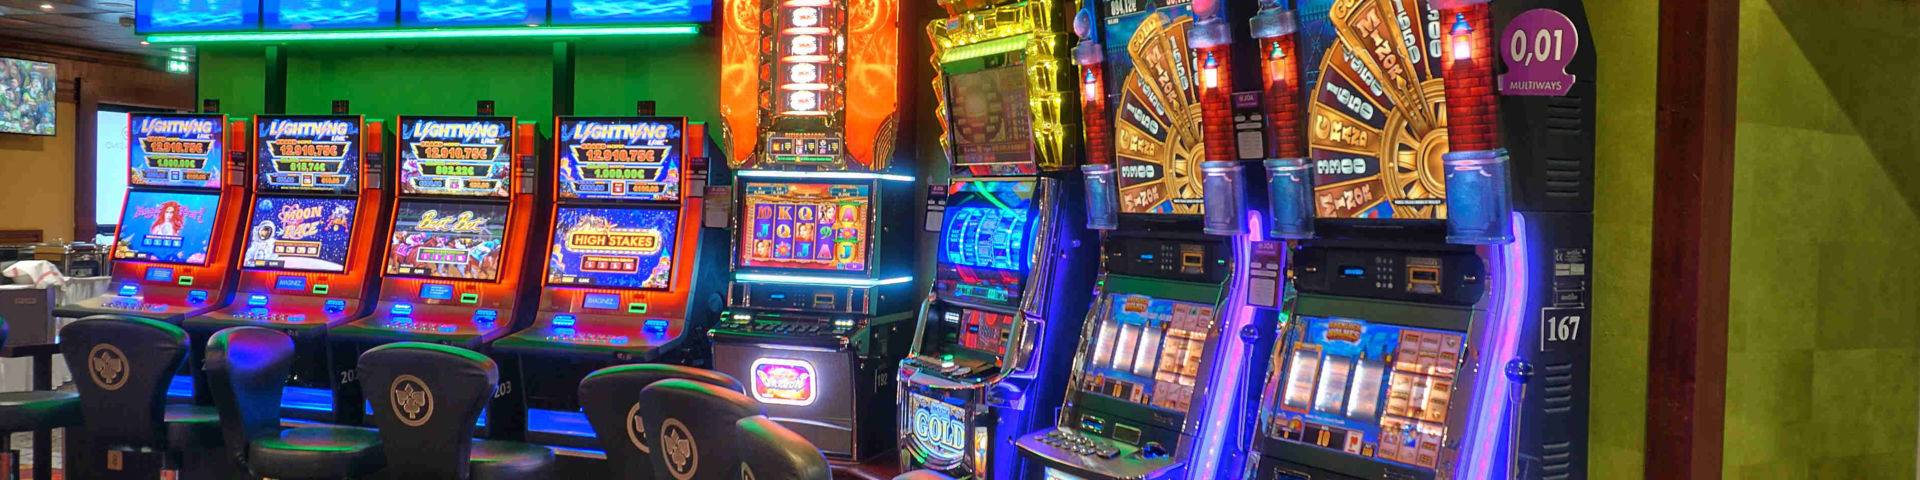 Machines sous casino JOA St-Aubin